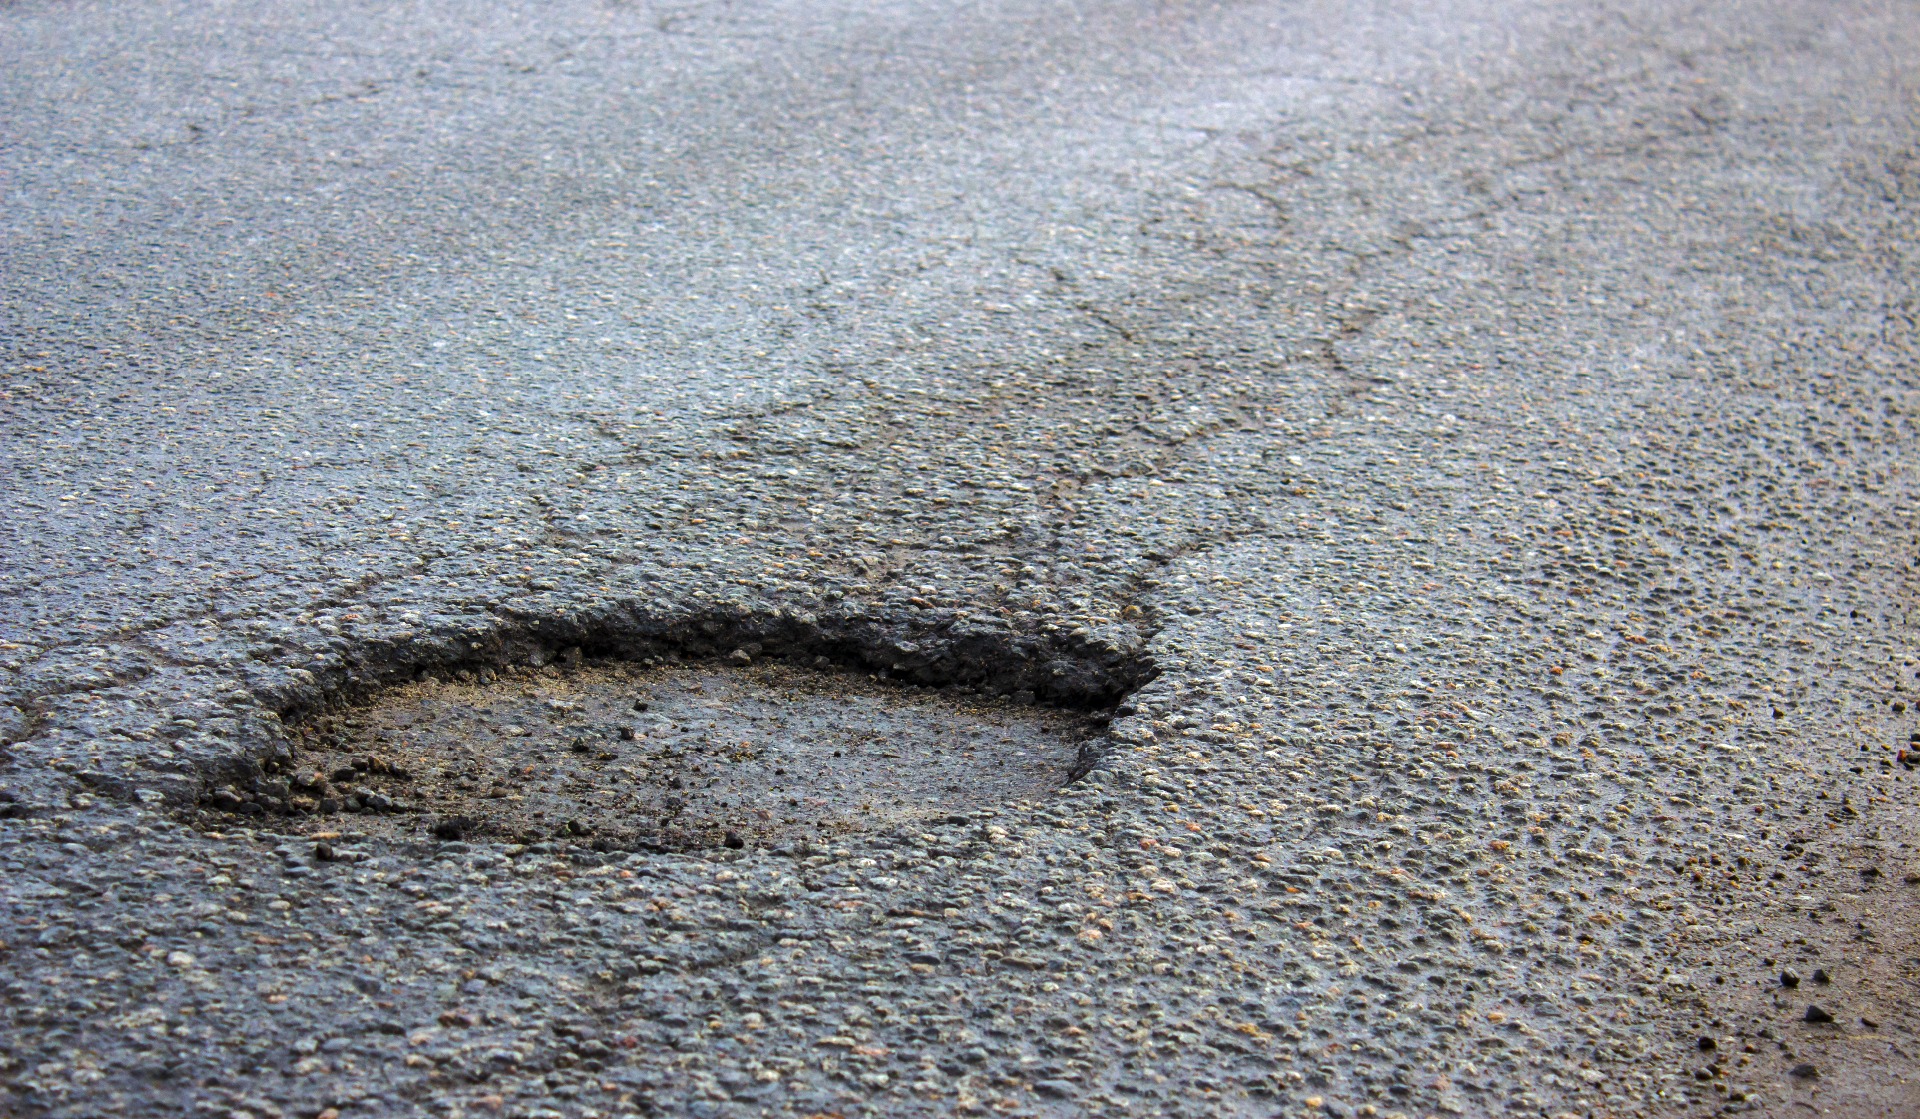 A pothole in a street.